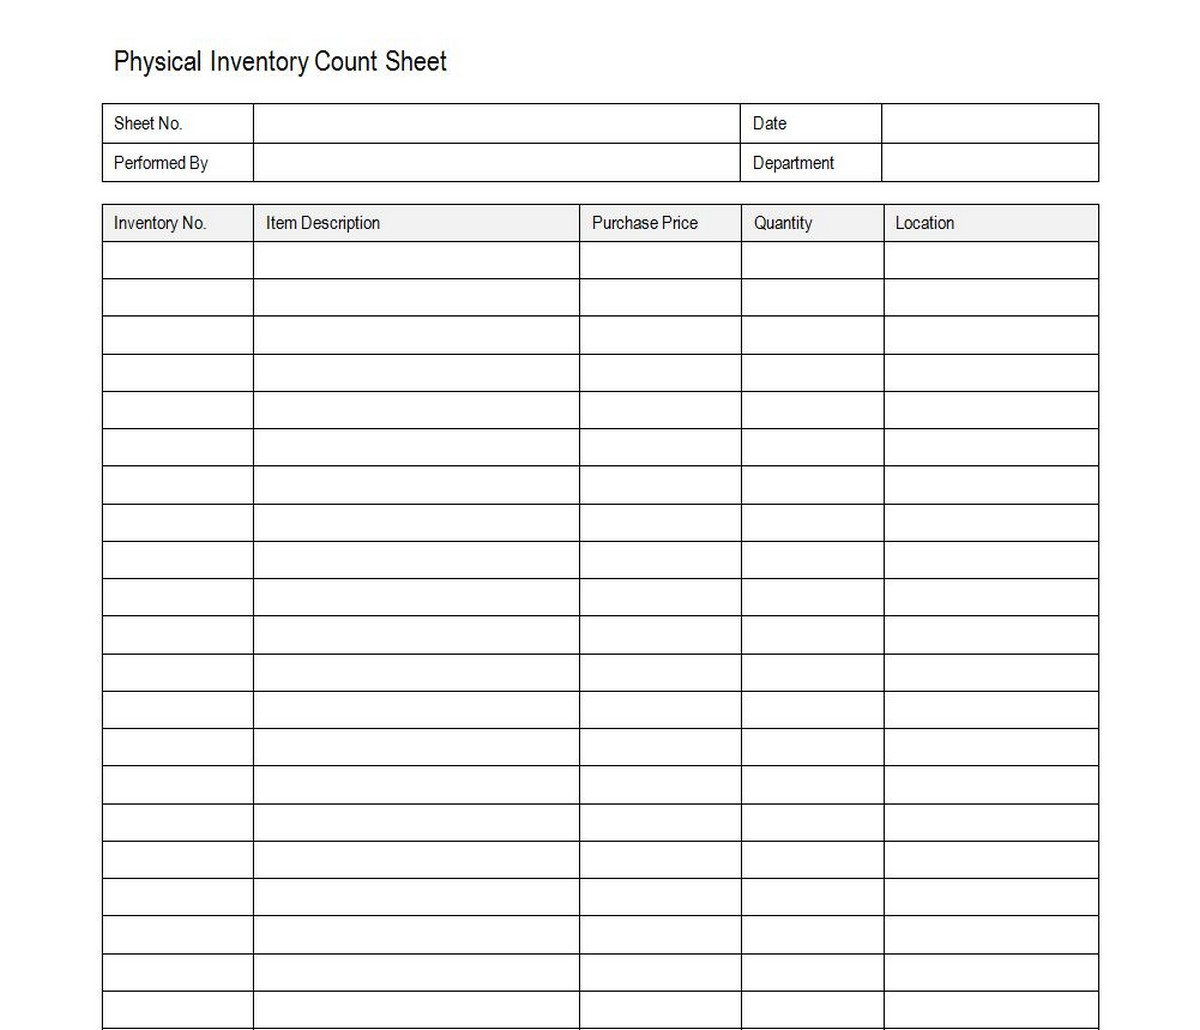 Liquor Inventory Spreadsheet 2018 Wedding Budget Spreadsheet How To And Liquor Inventory Spreadsheet